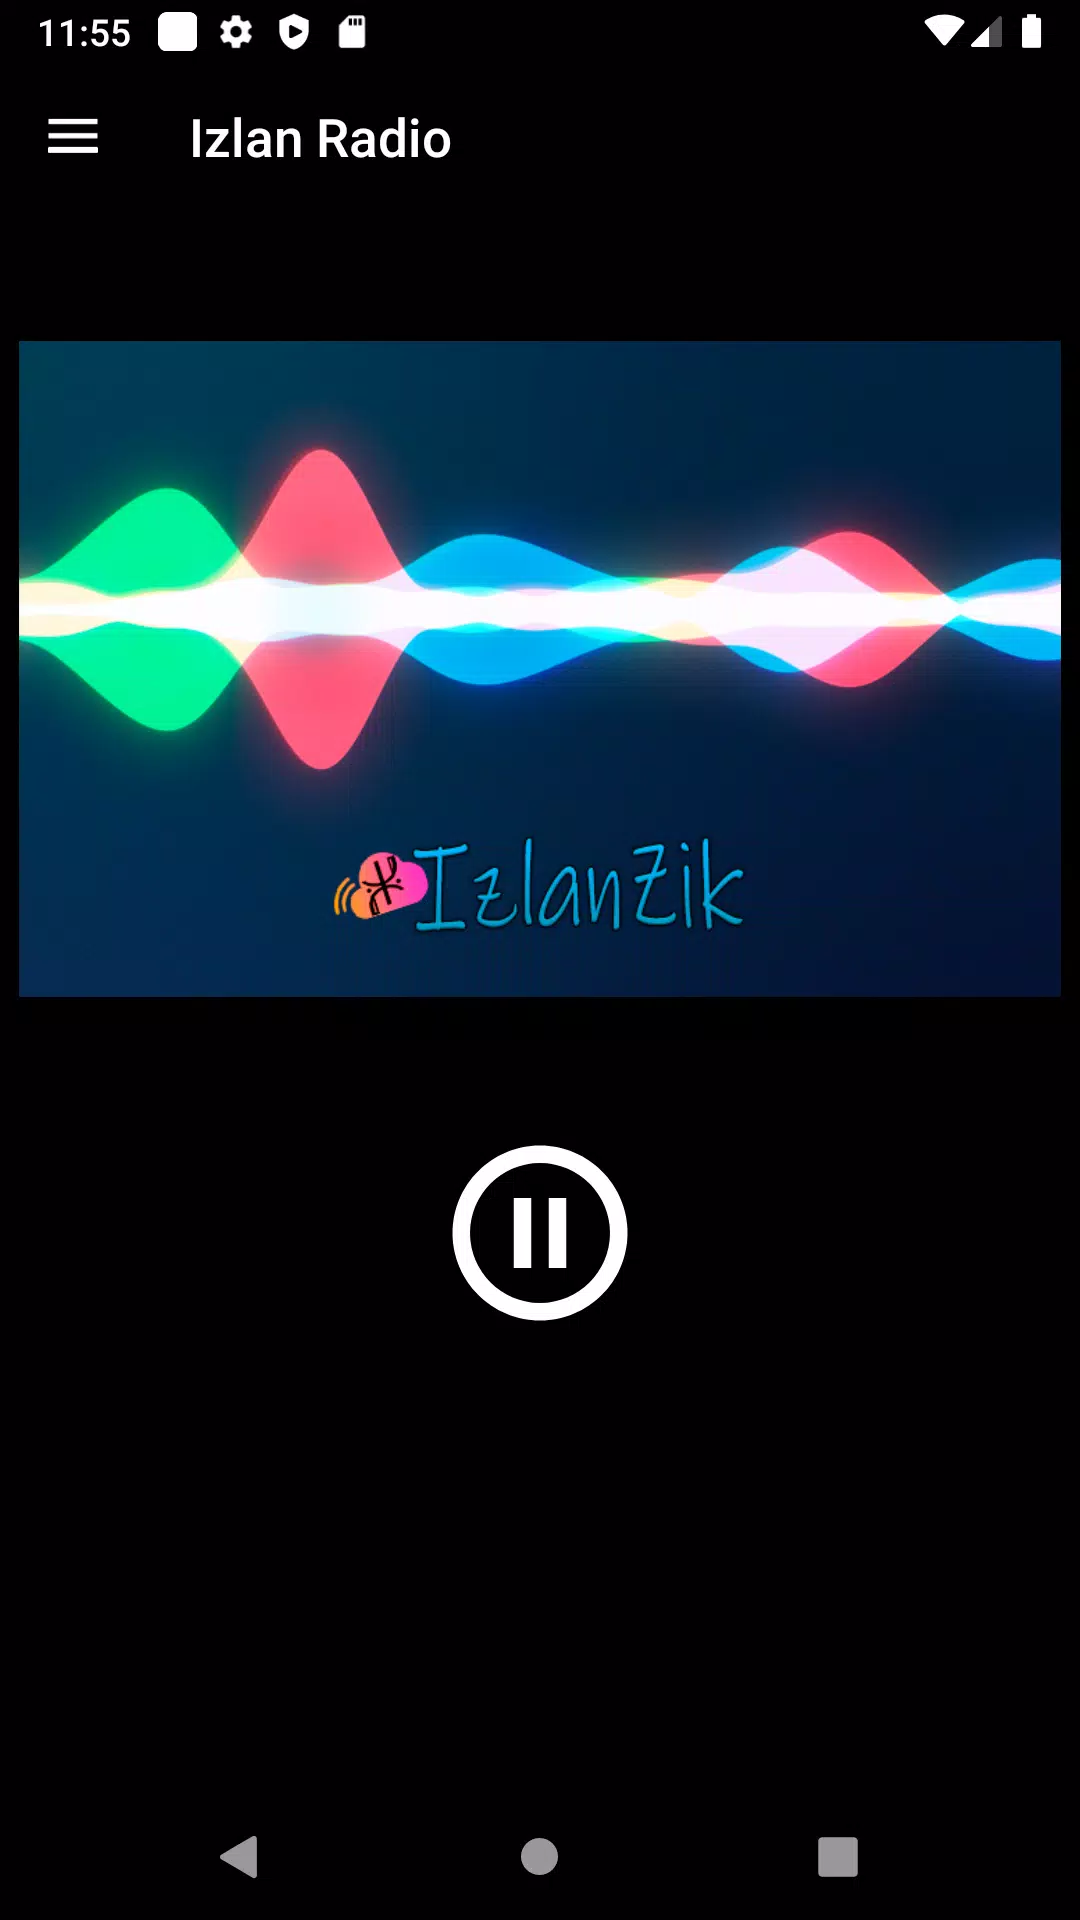 Download do APK de IzlanZik Radio Amazigh para Android